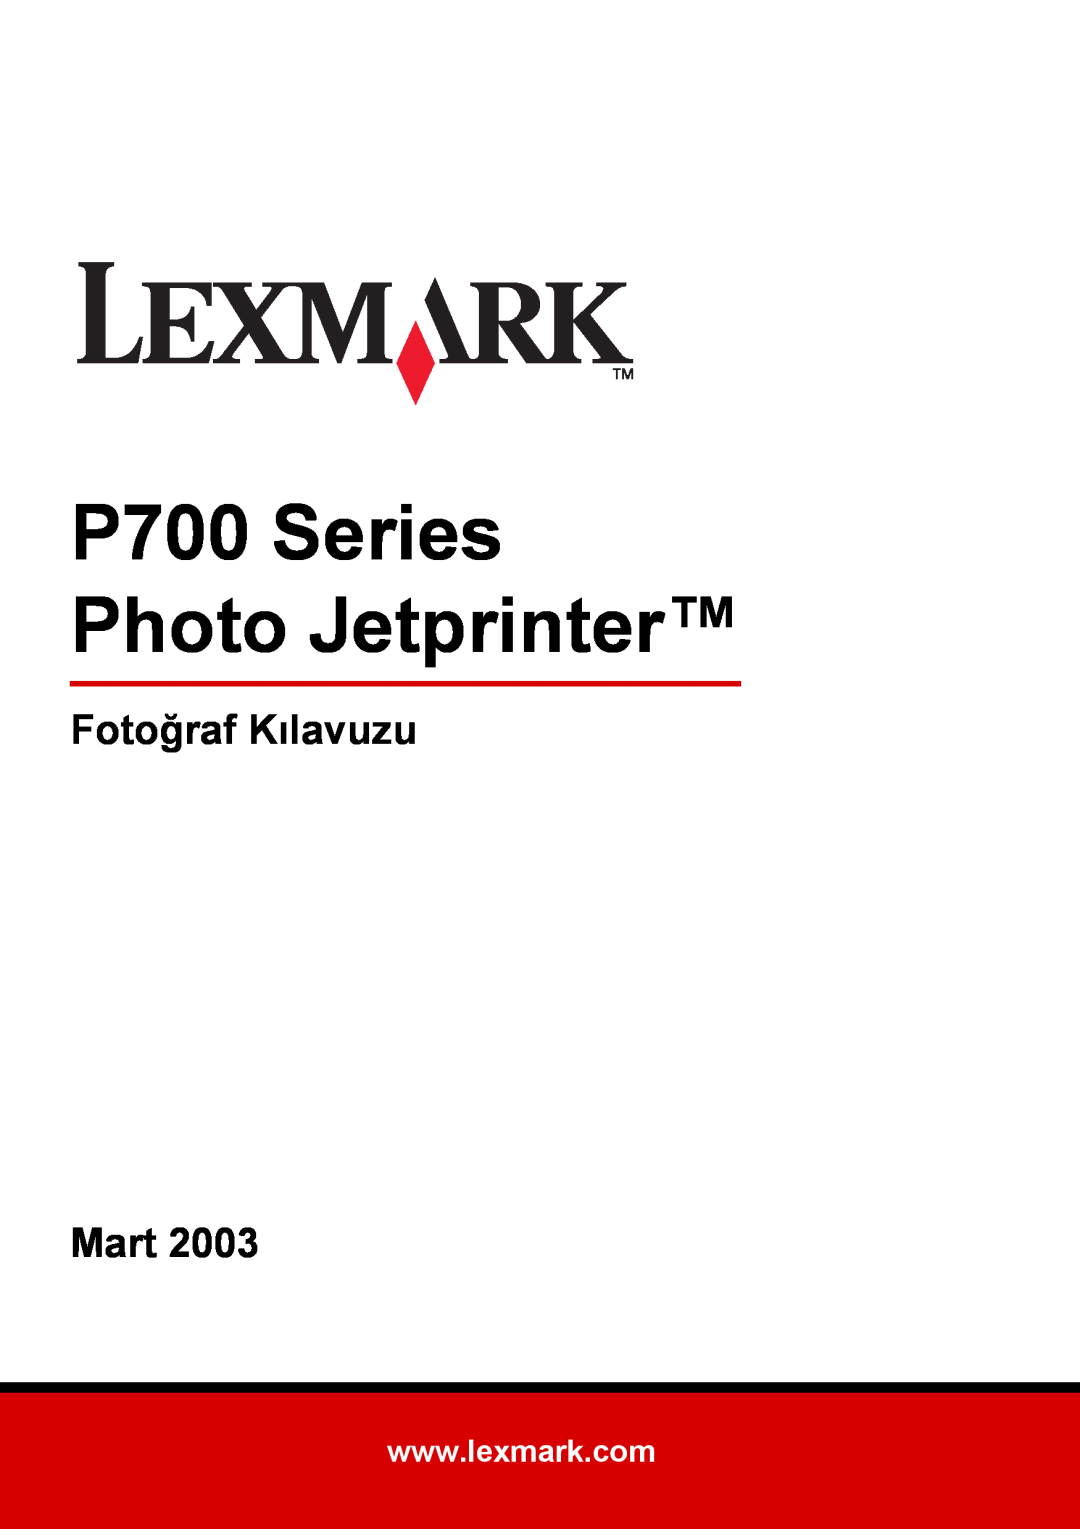 Lexmark manual P700 Series Photo Jetprinter, Photo Guide March 